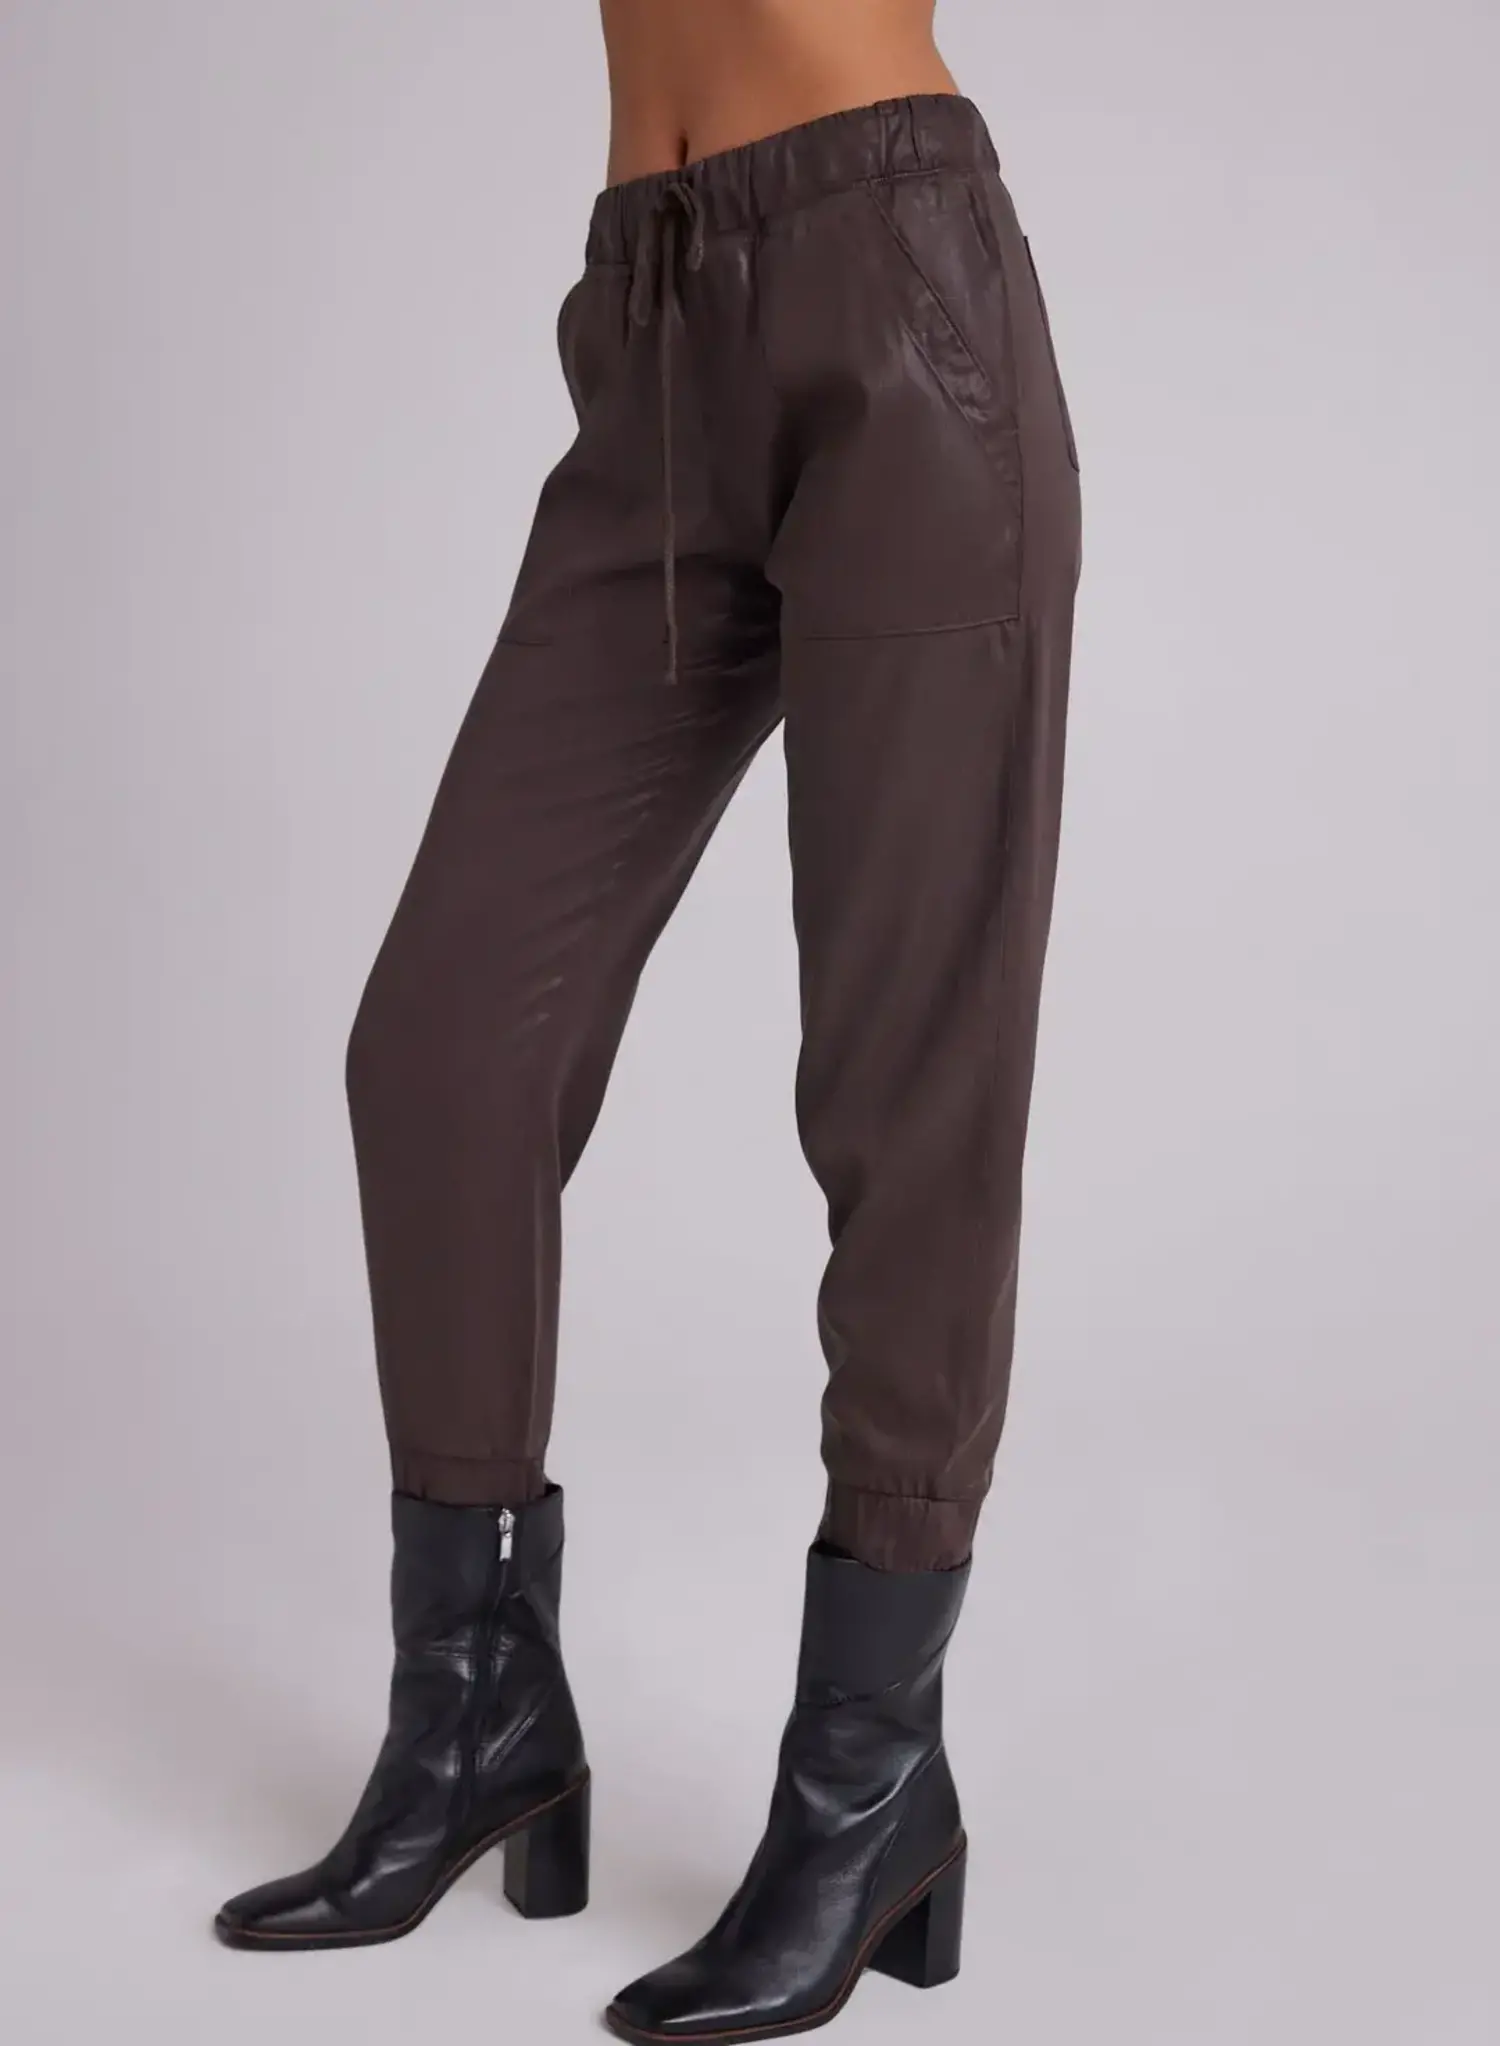 NEW Zella Cara Pocket Joggers Pants - Black - X-Large